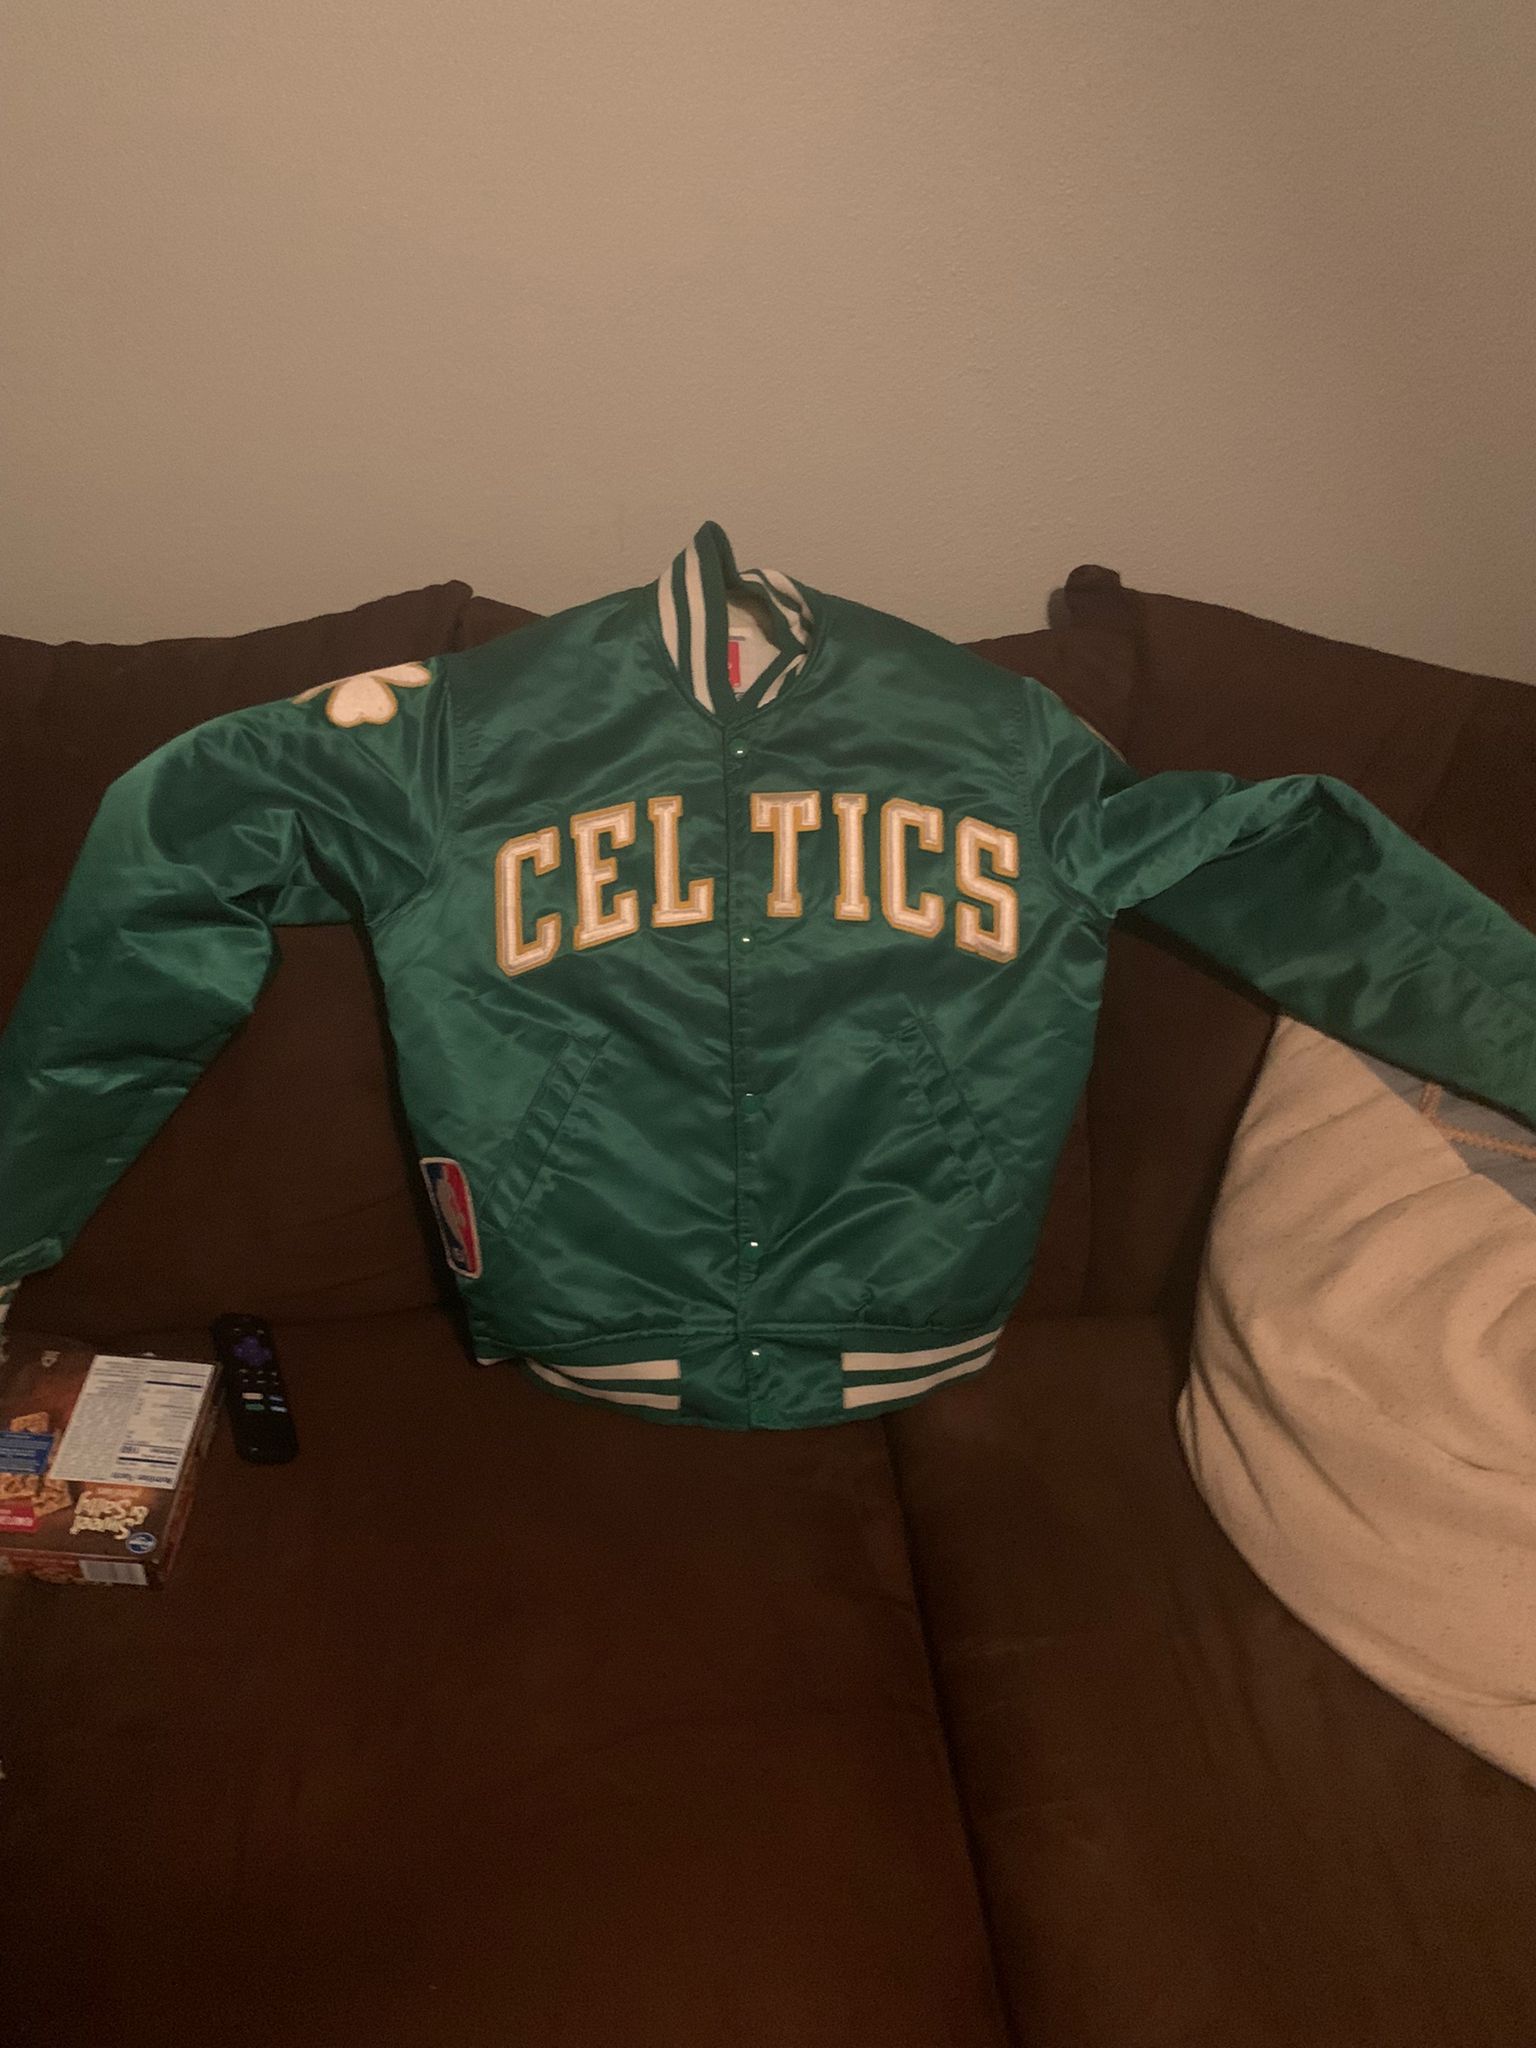 Rare Vintage Starter Satin Bomber Jacket 1980s 90s Boston Celtics Nba